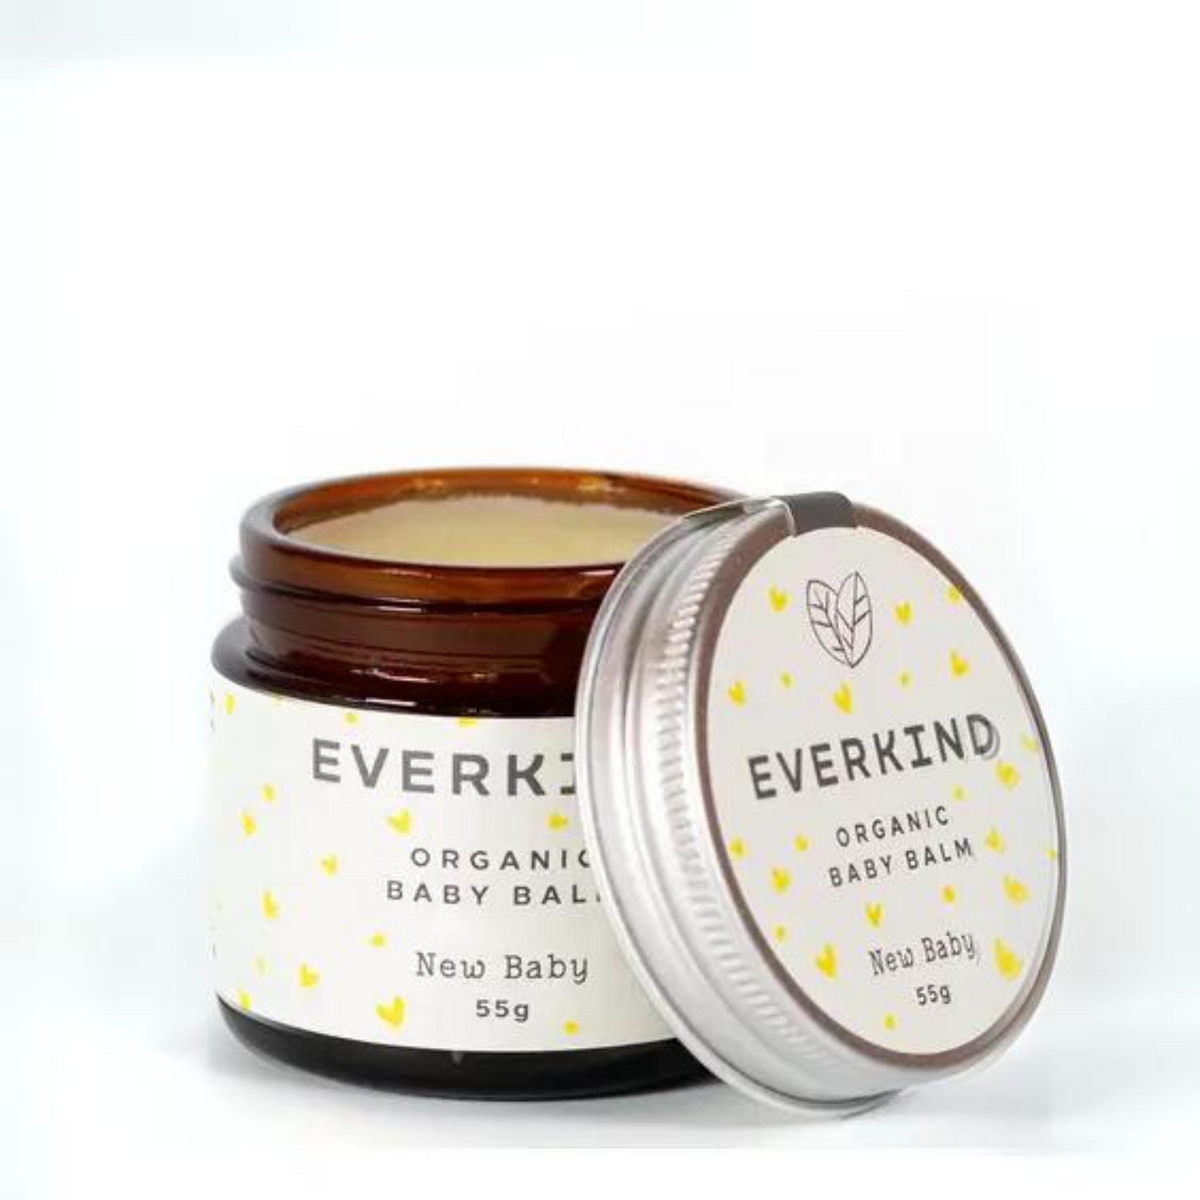 Everkind Organic Baby Balm - New Baby